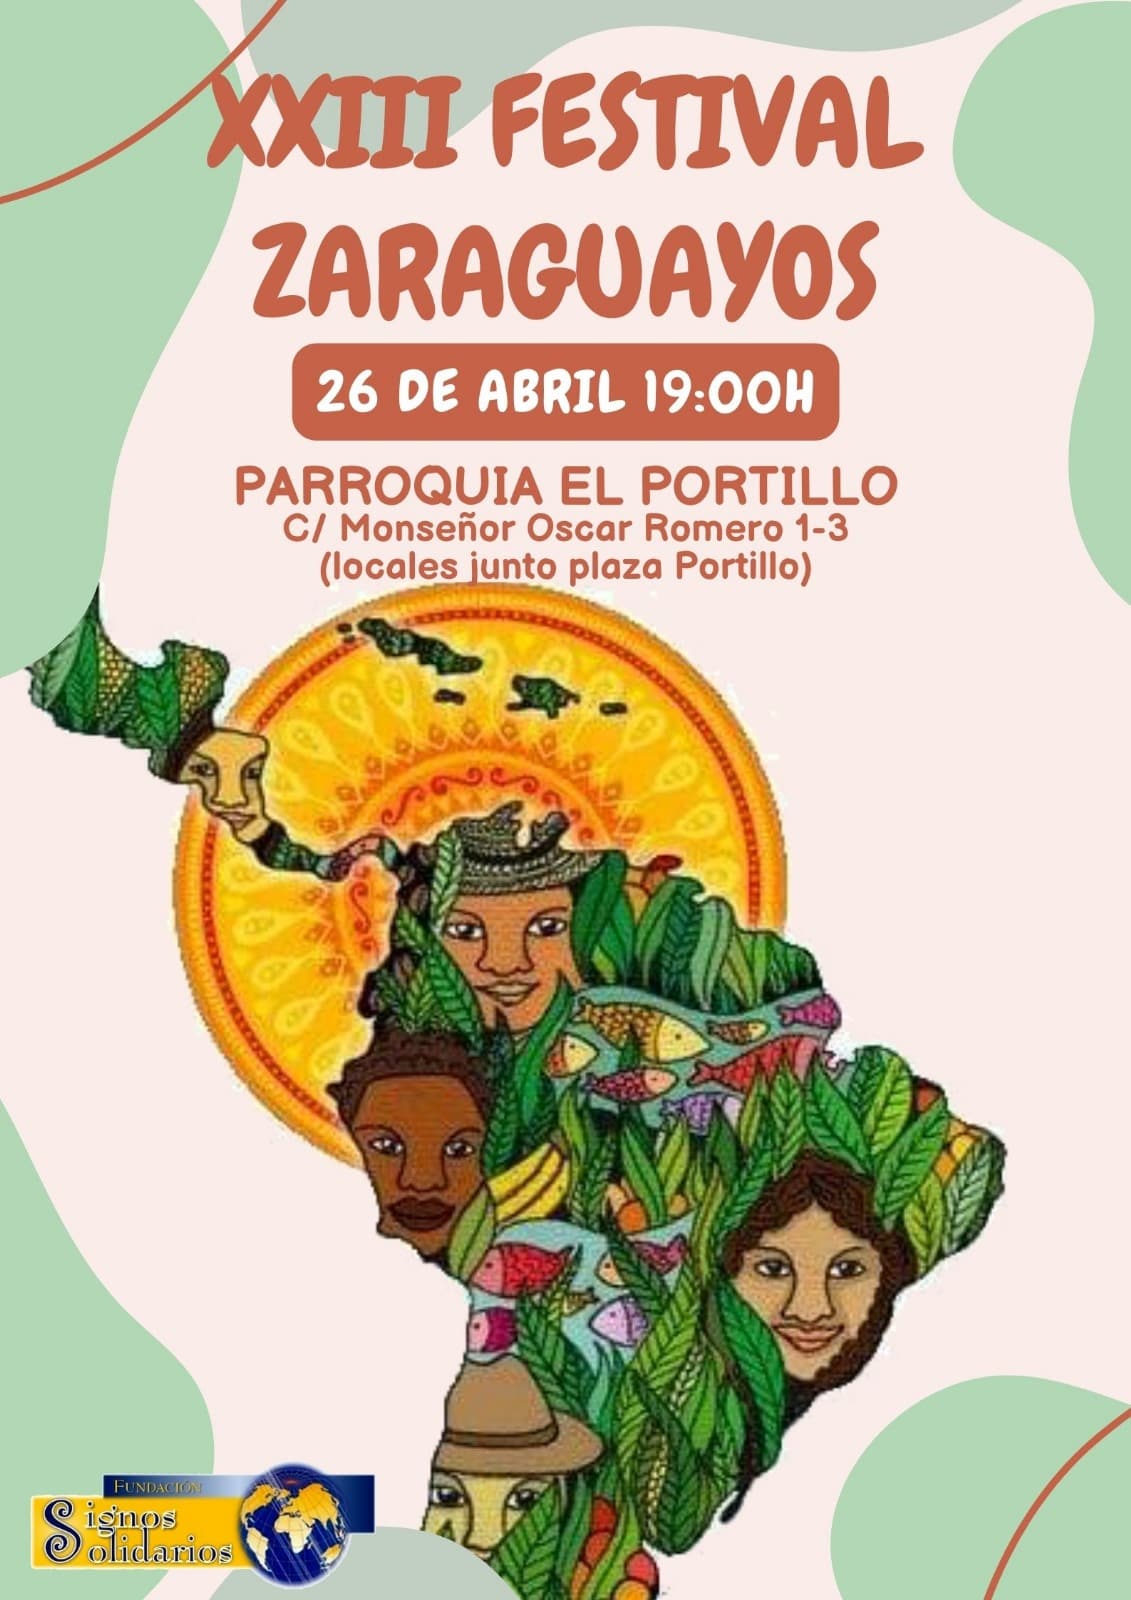 XXIII Festival de Zaraguayos